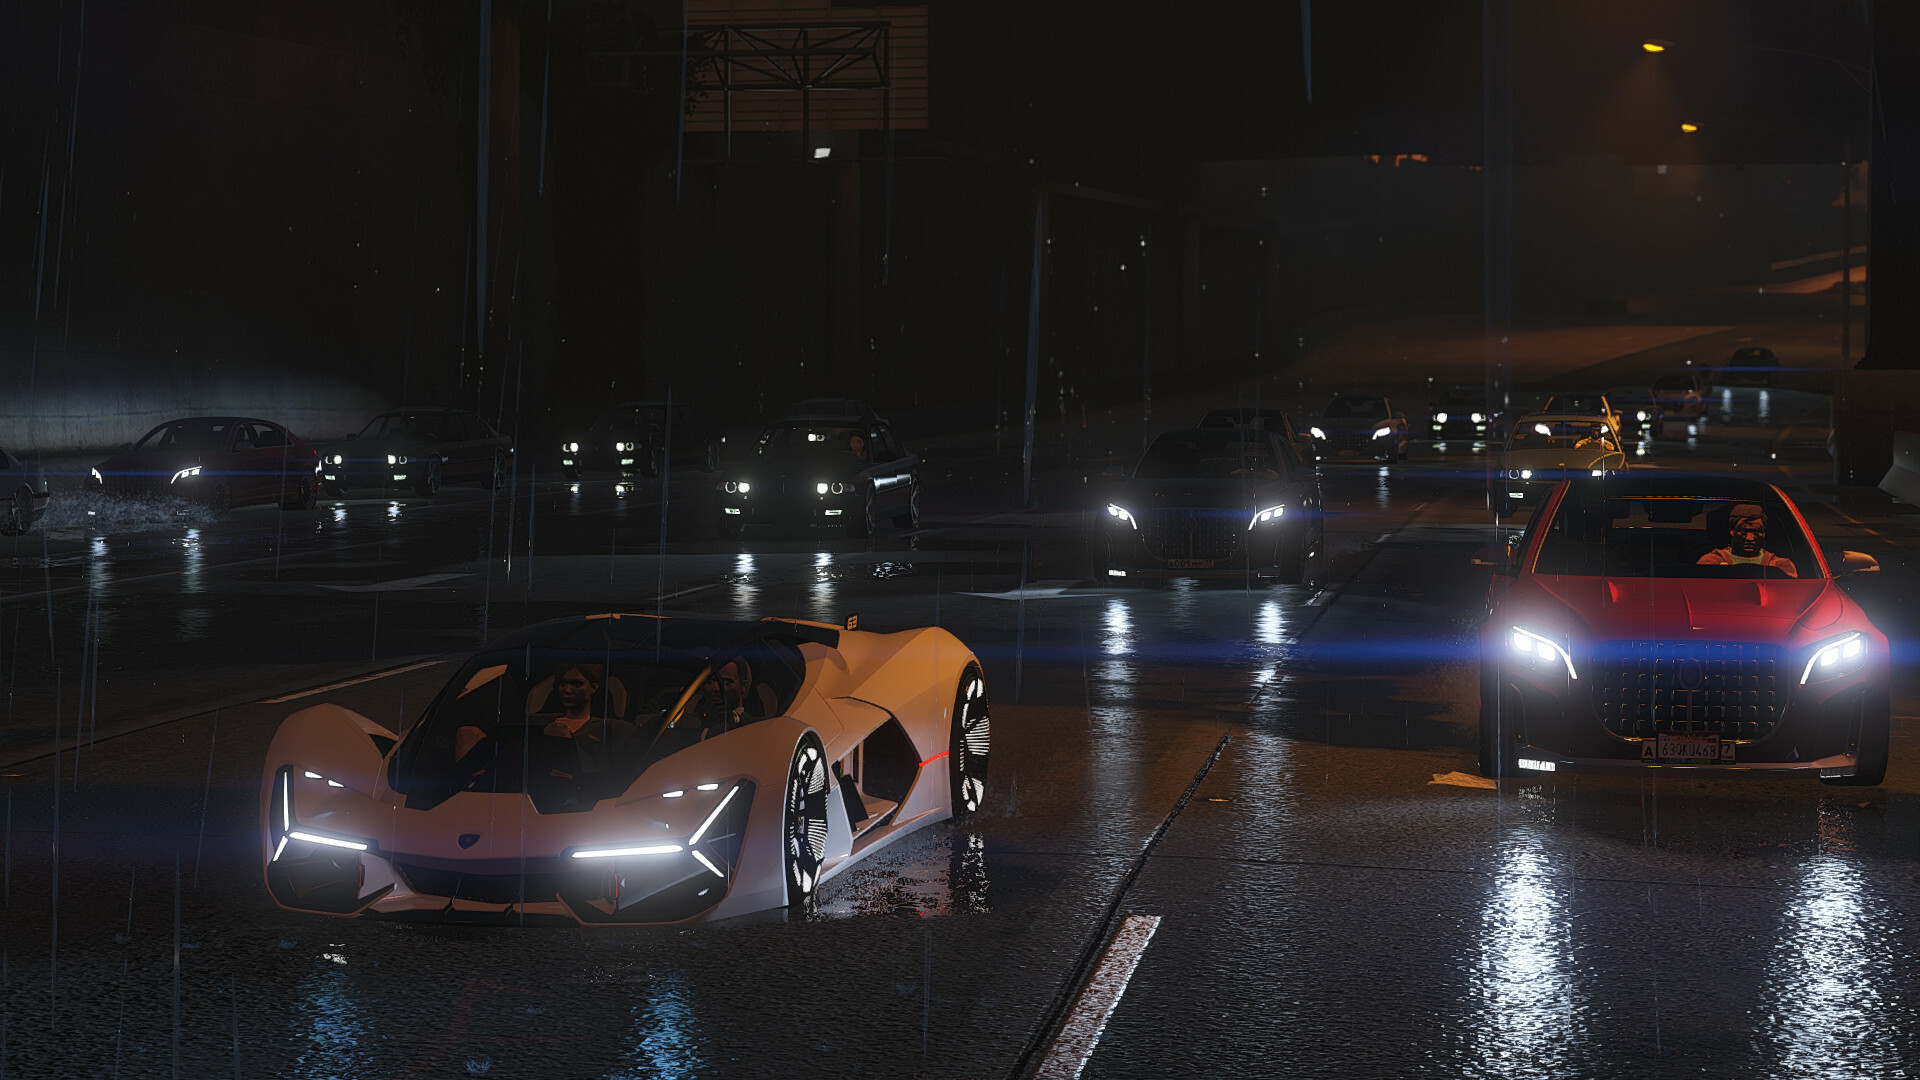 Night Shot of the Lamborghini Terzo Millennio. : r/GTAV